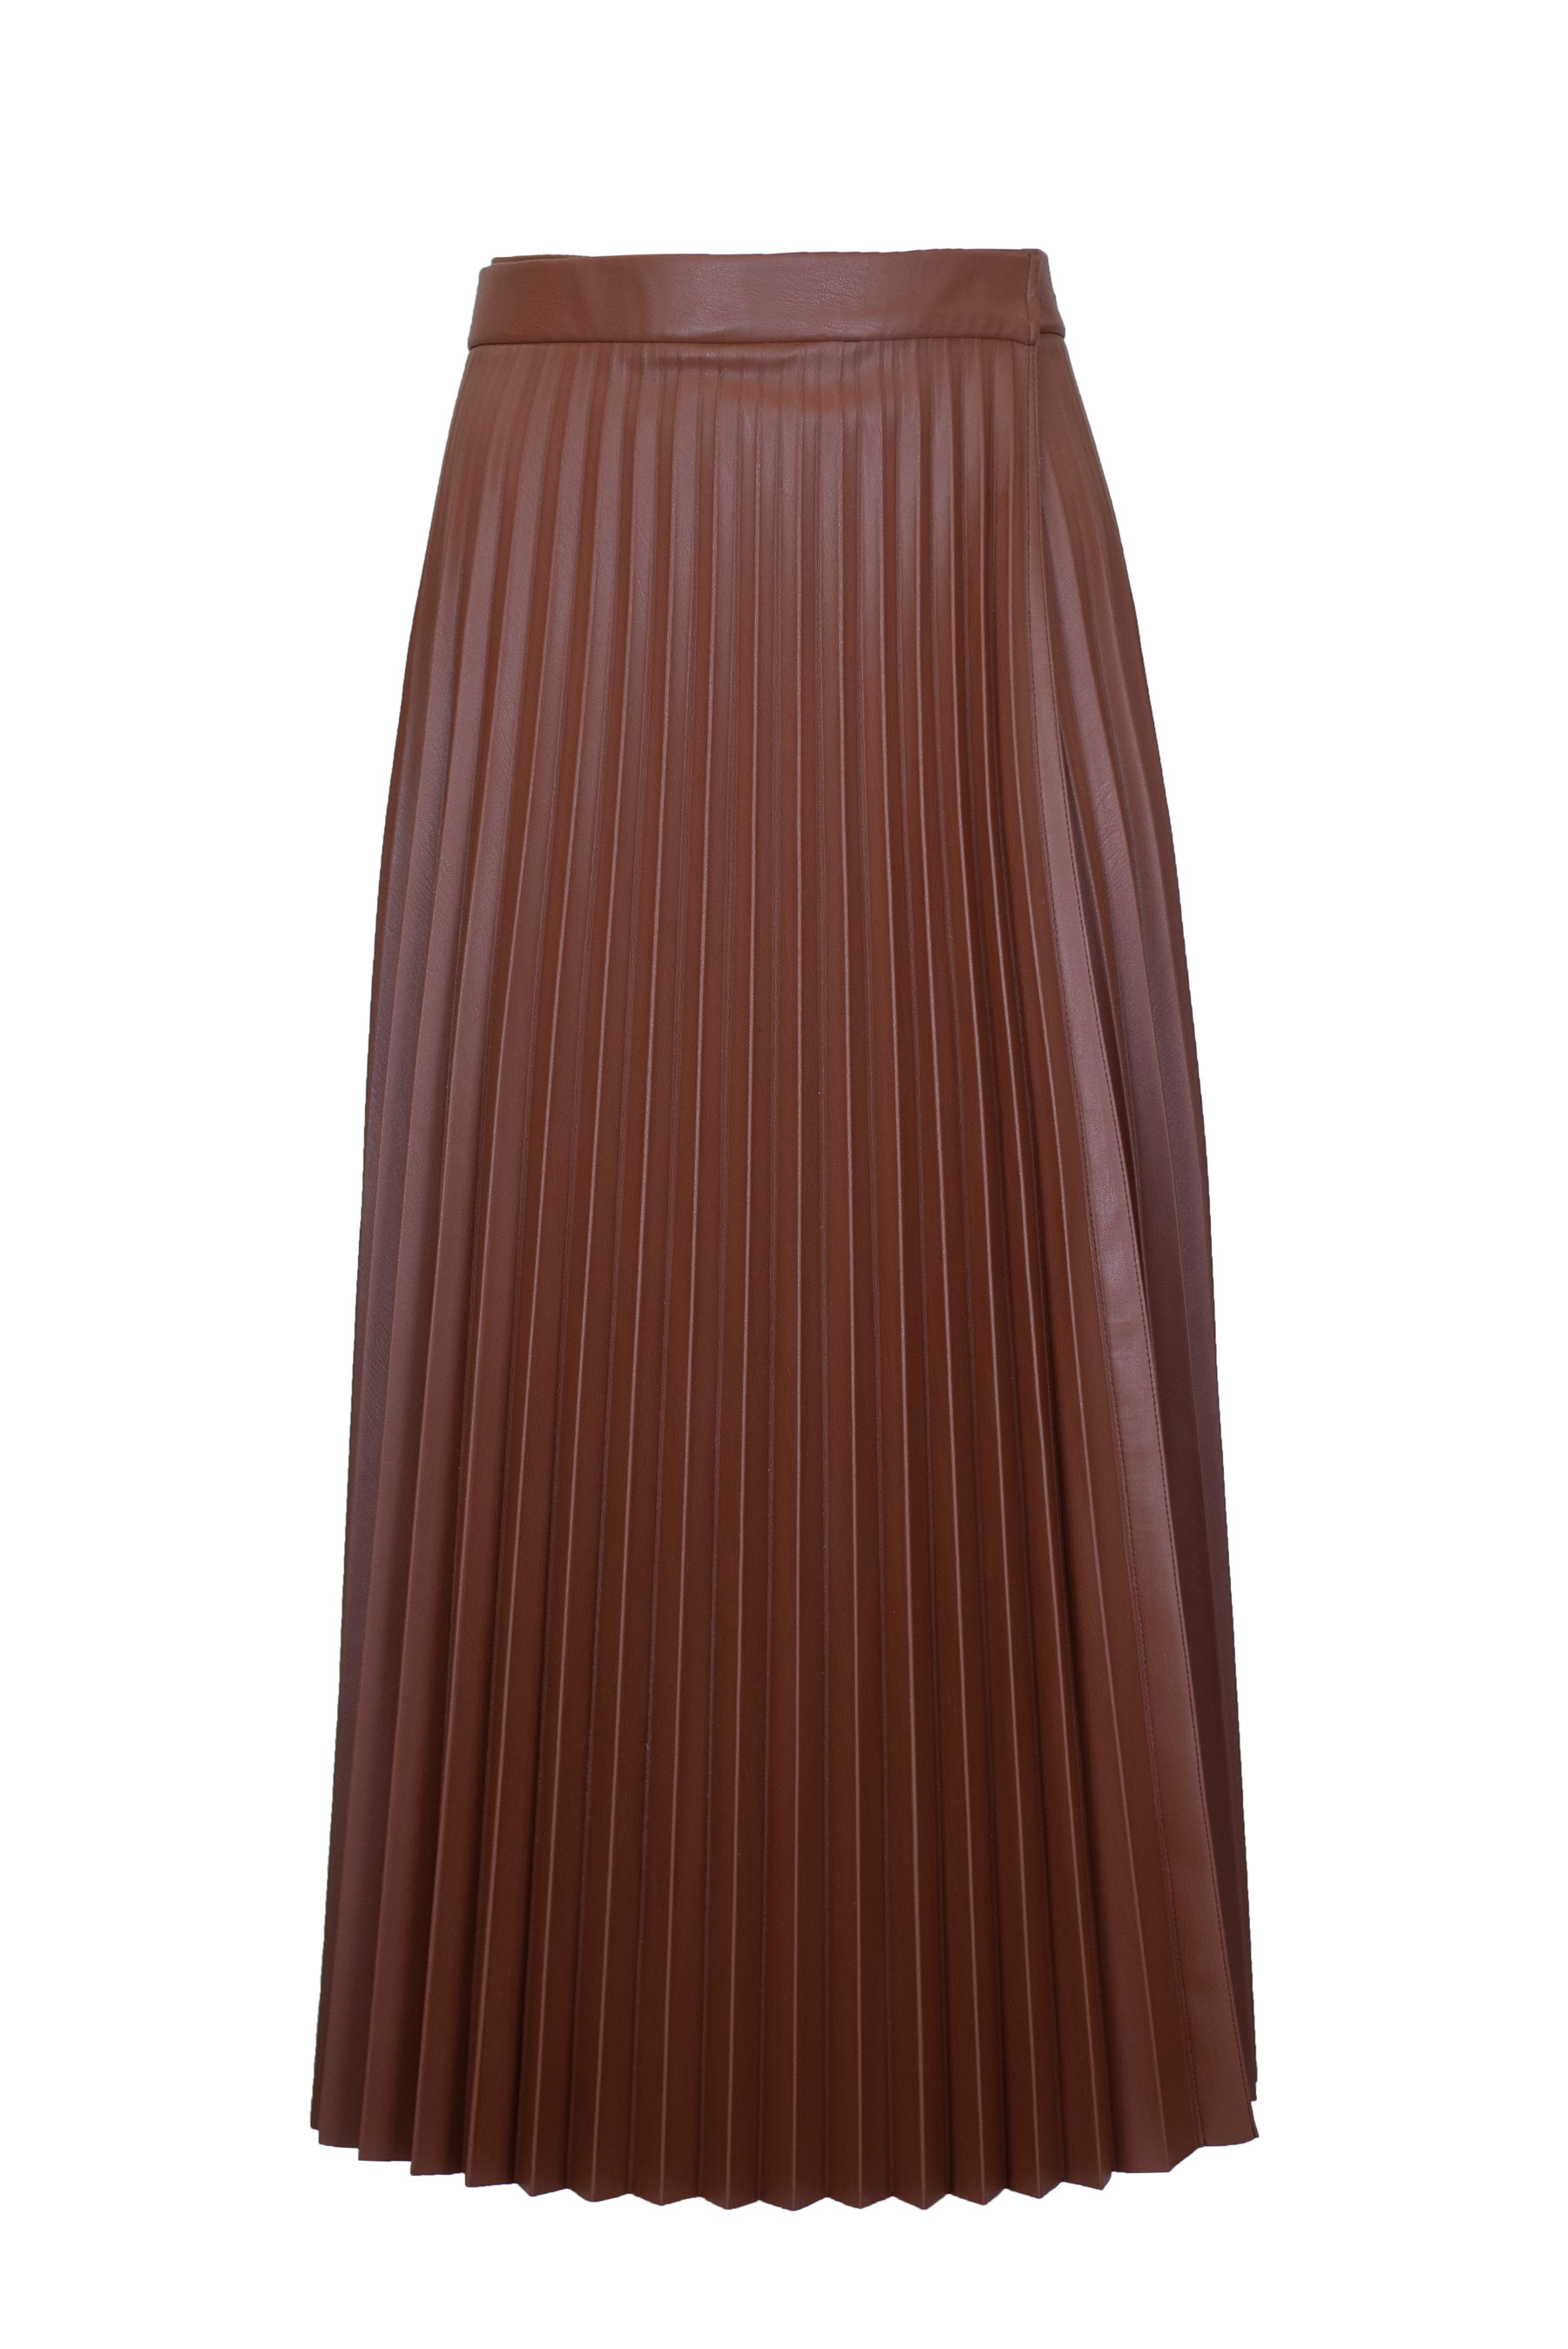  Eco-leather brown skirt photo